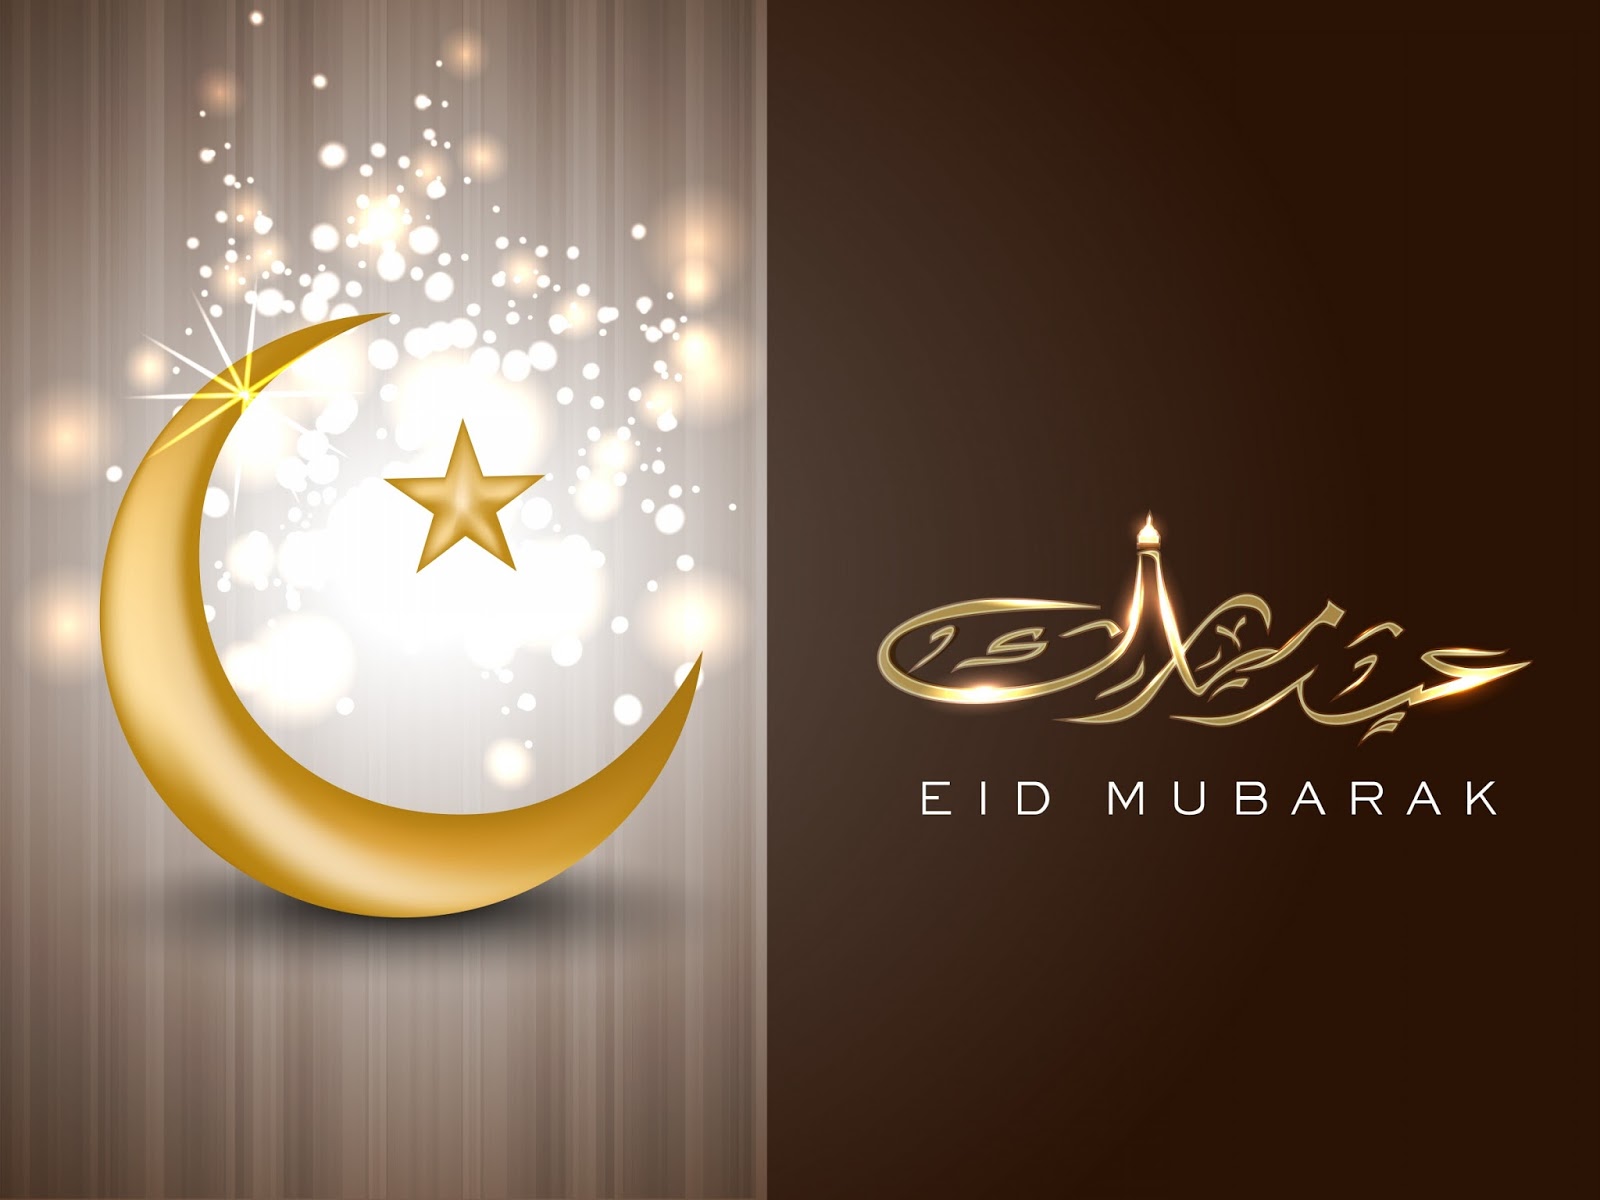 Eid Mubarak Images HD Free Download for Facebook